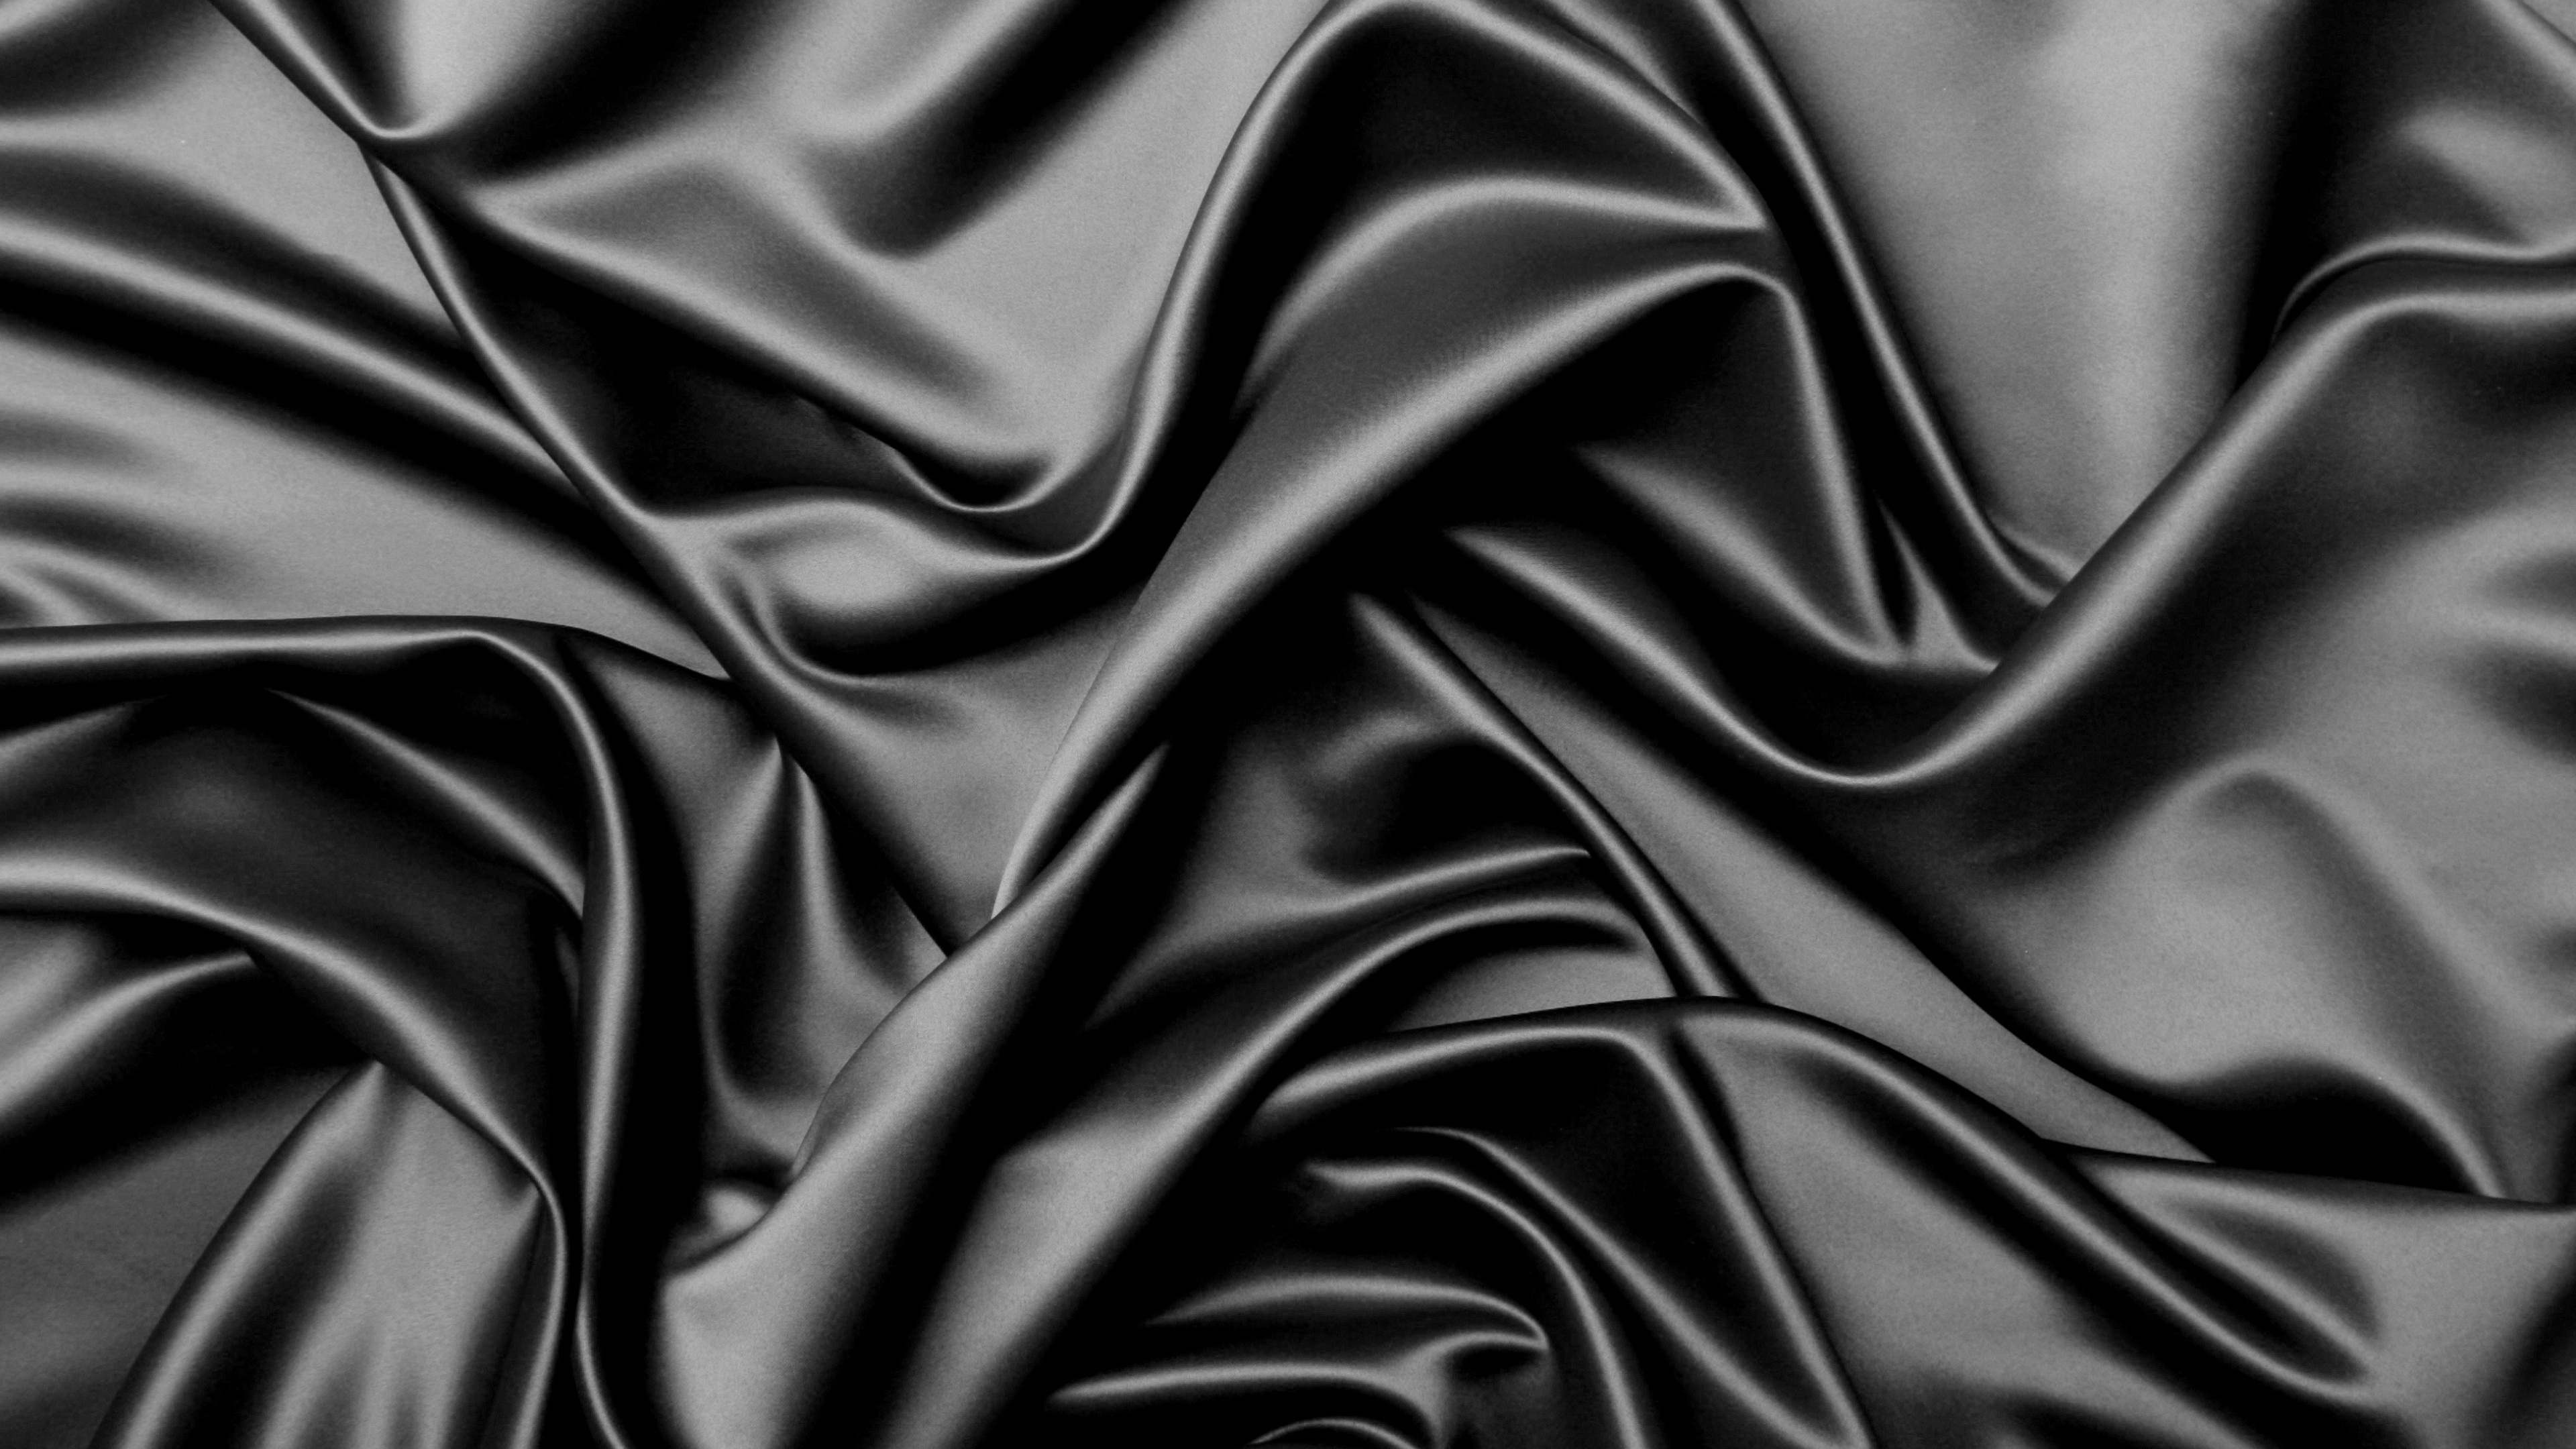 Download wallpaper 3840x2160 black, fabric, texture 4k wallpaper, uhd  wallpaper, 16:9 widescreen 3840x2160 hd background, 3338